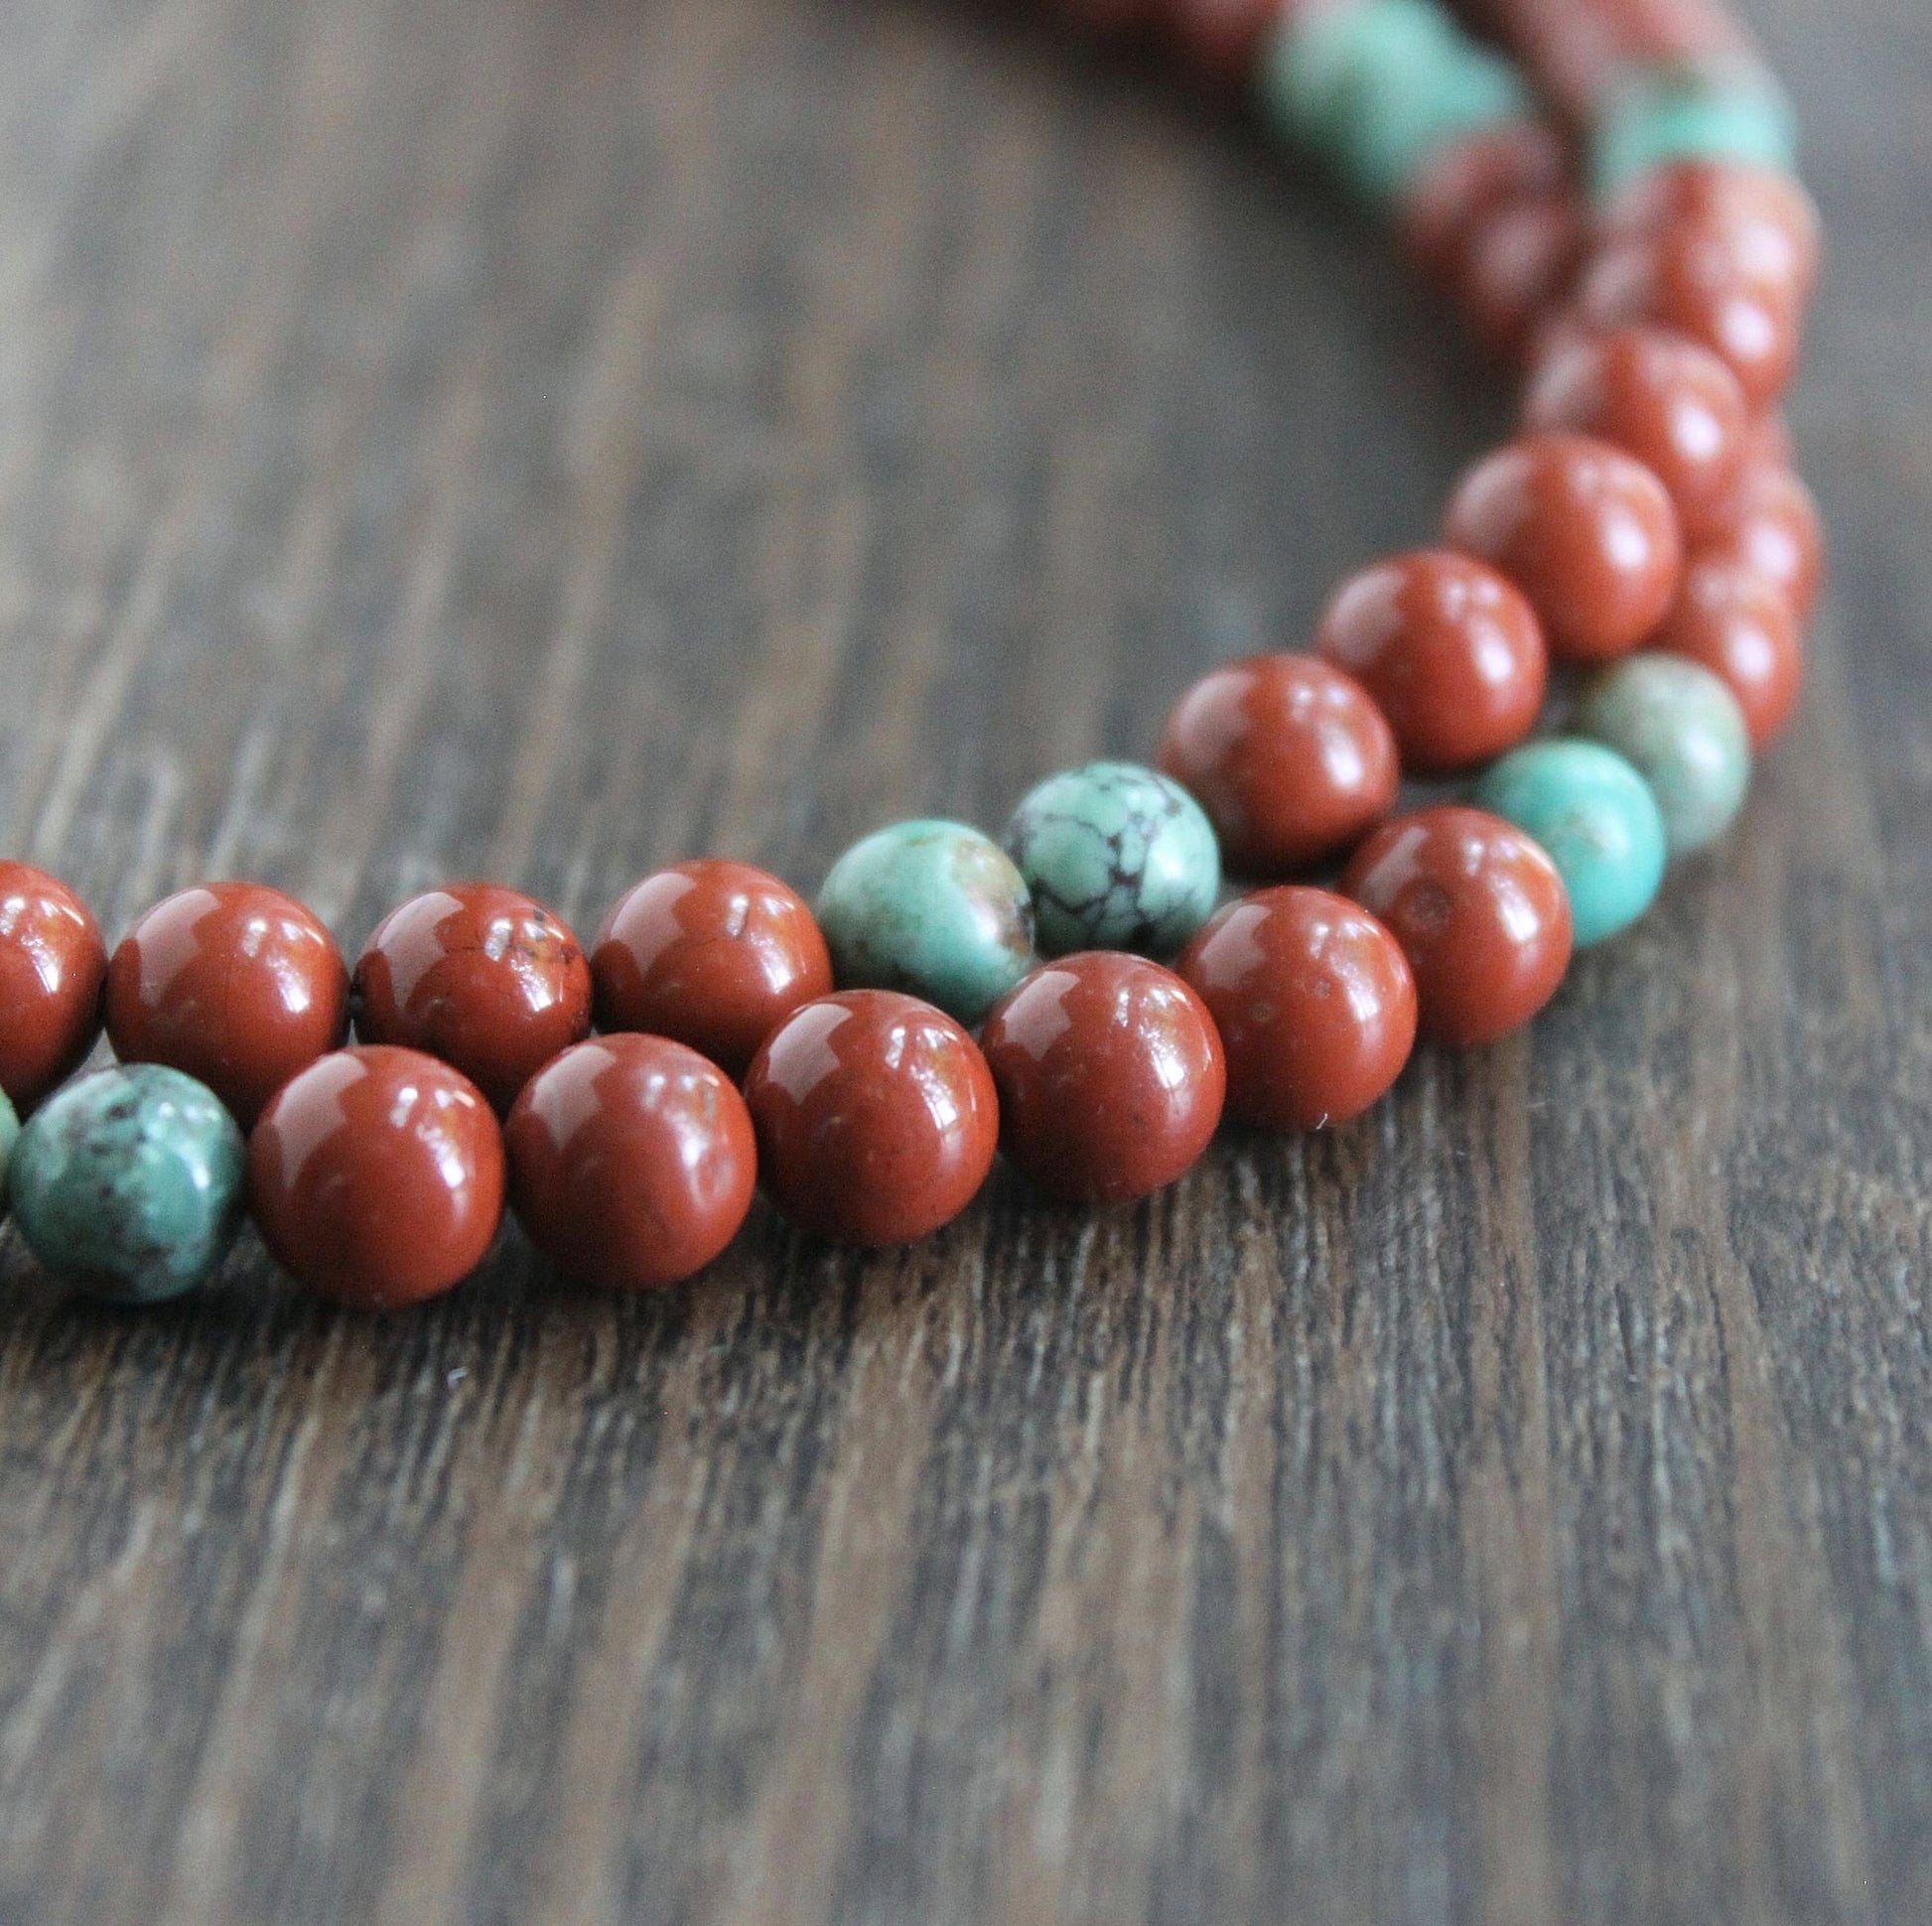 Necklace Jasper red necklace beads stones natural Ural decoration